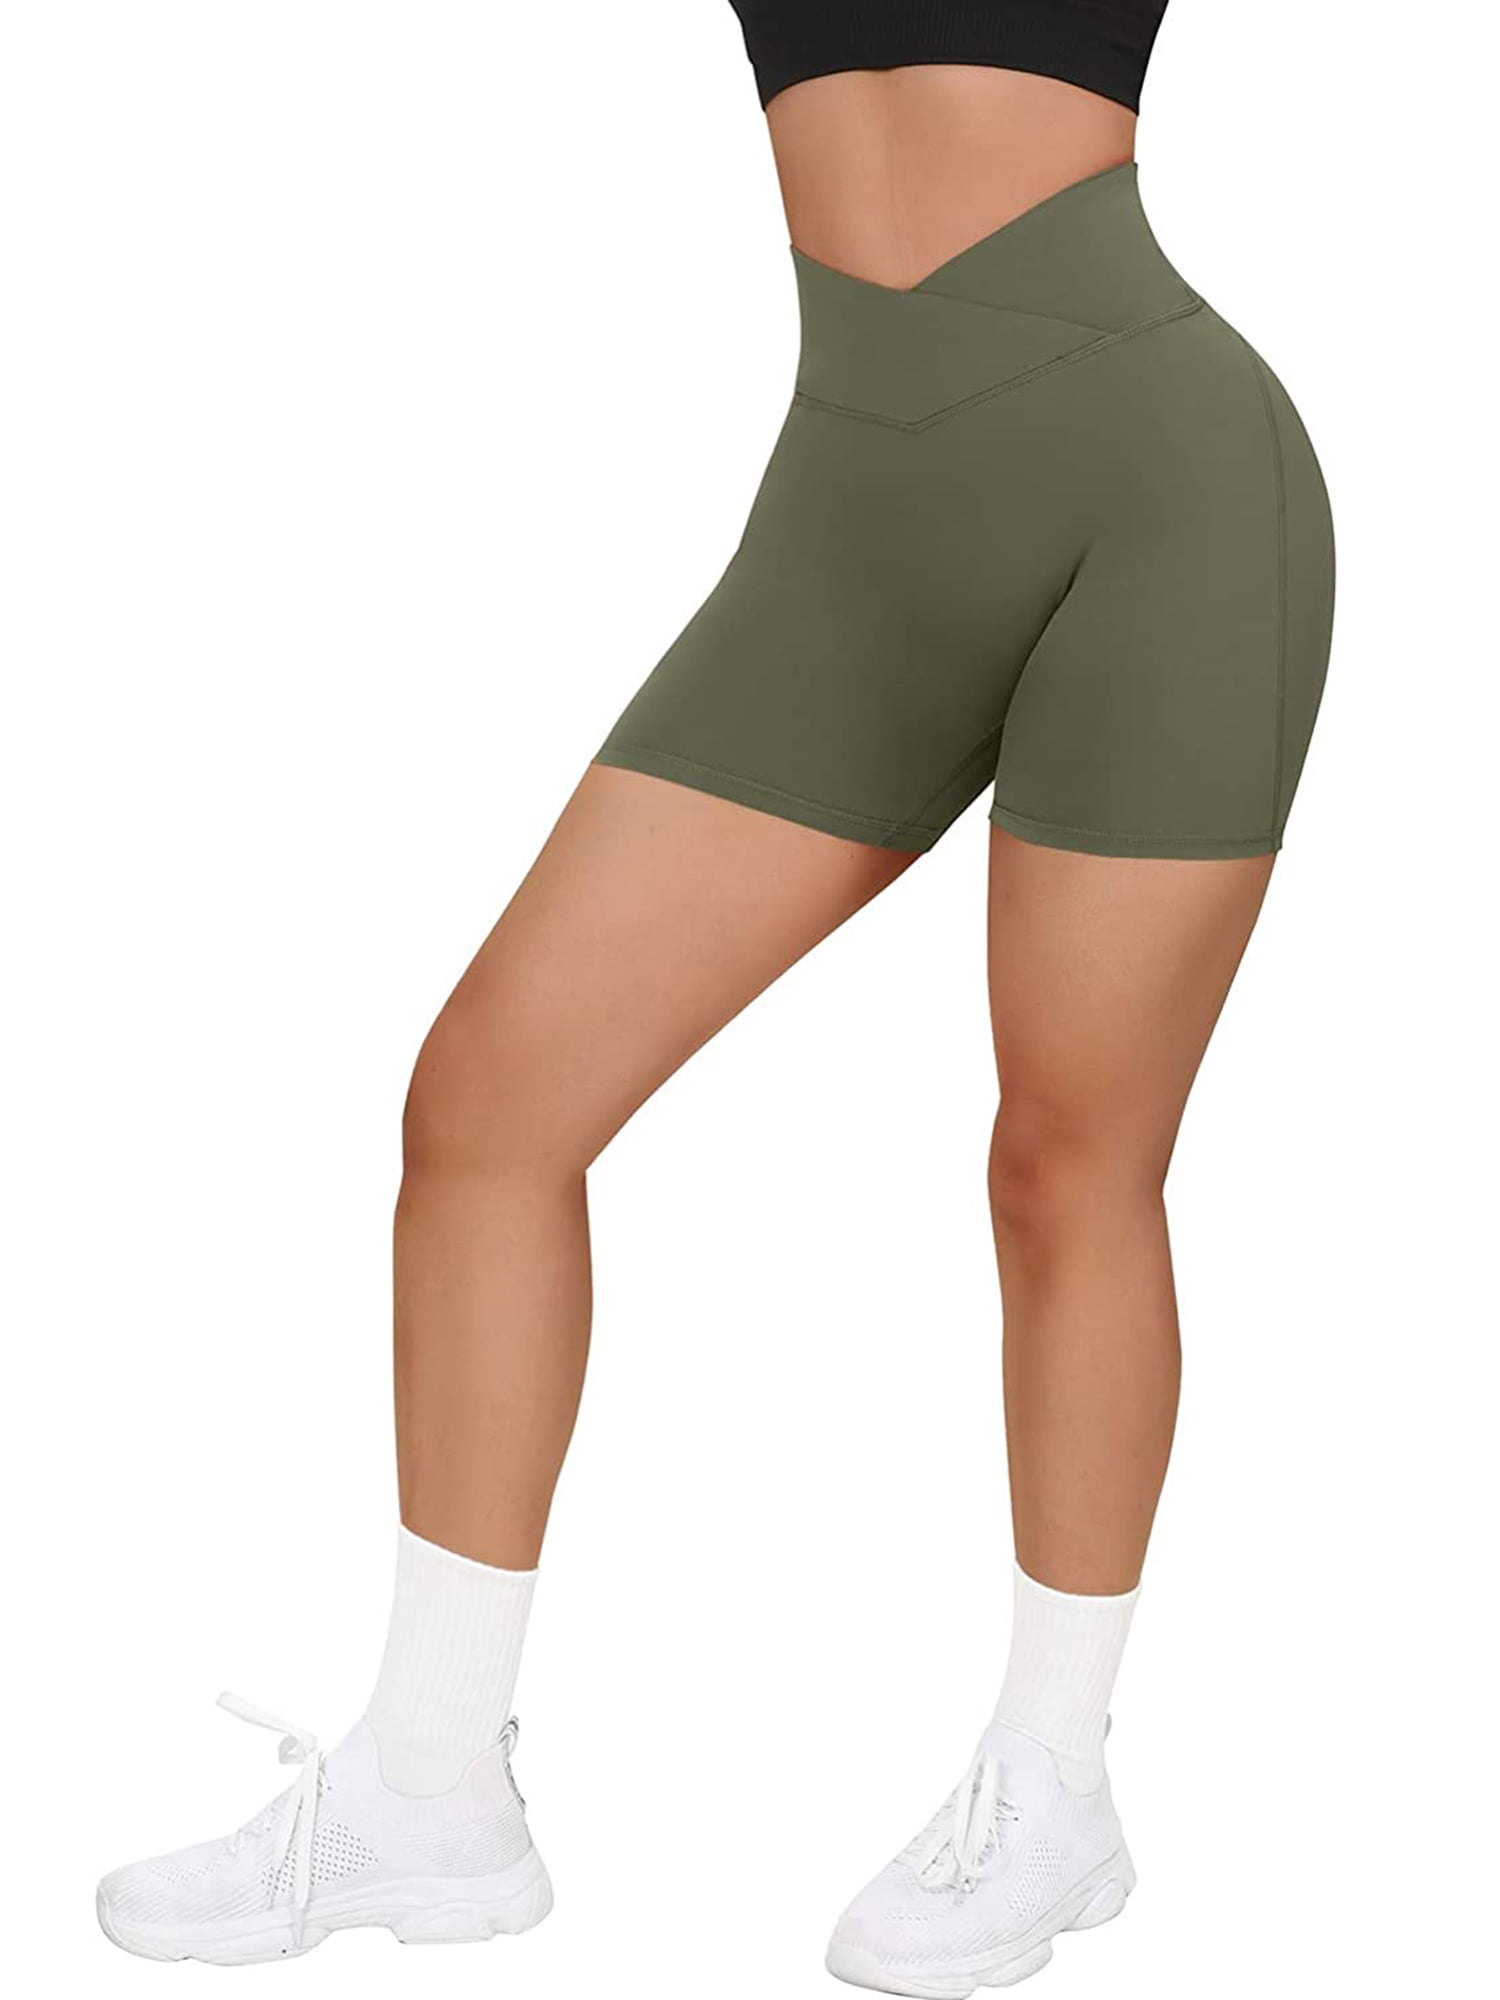 GXFC Workout Shorts for Women Seamless Scrunch Short Gym Yoga High